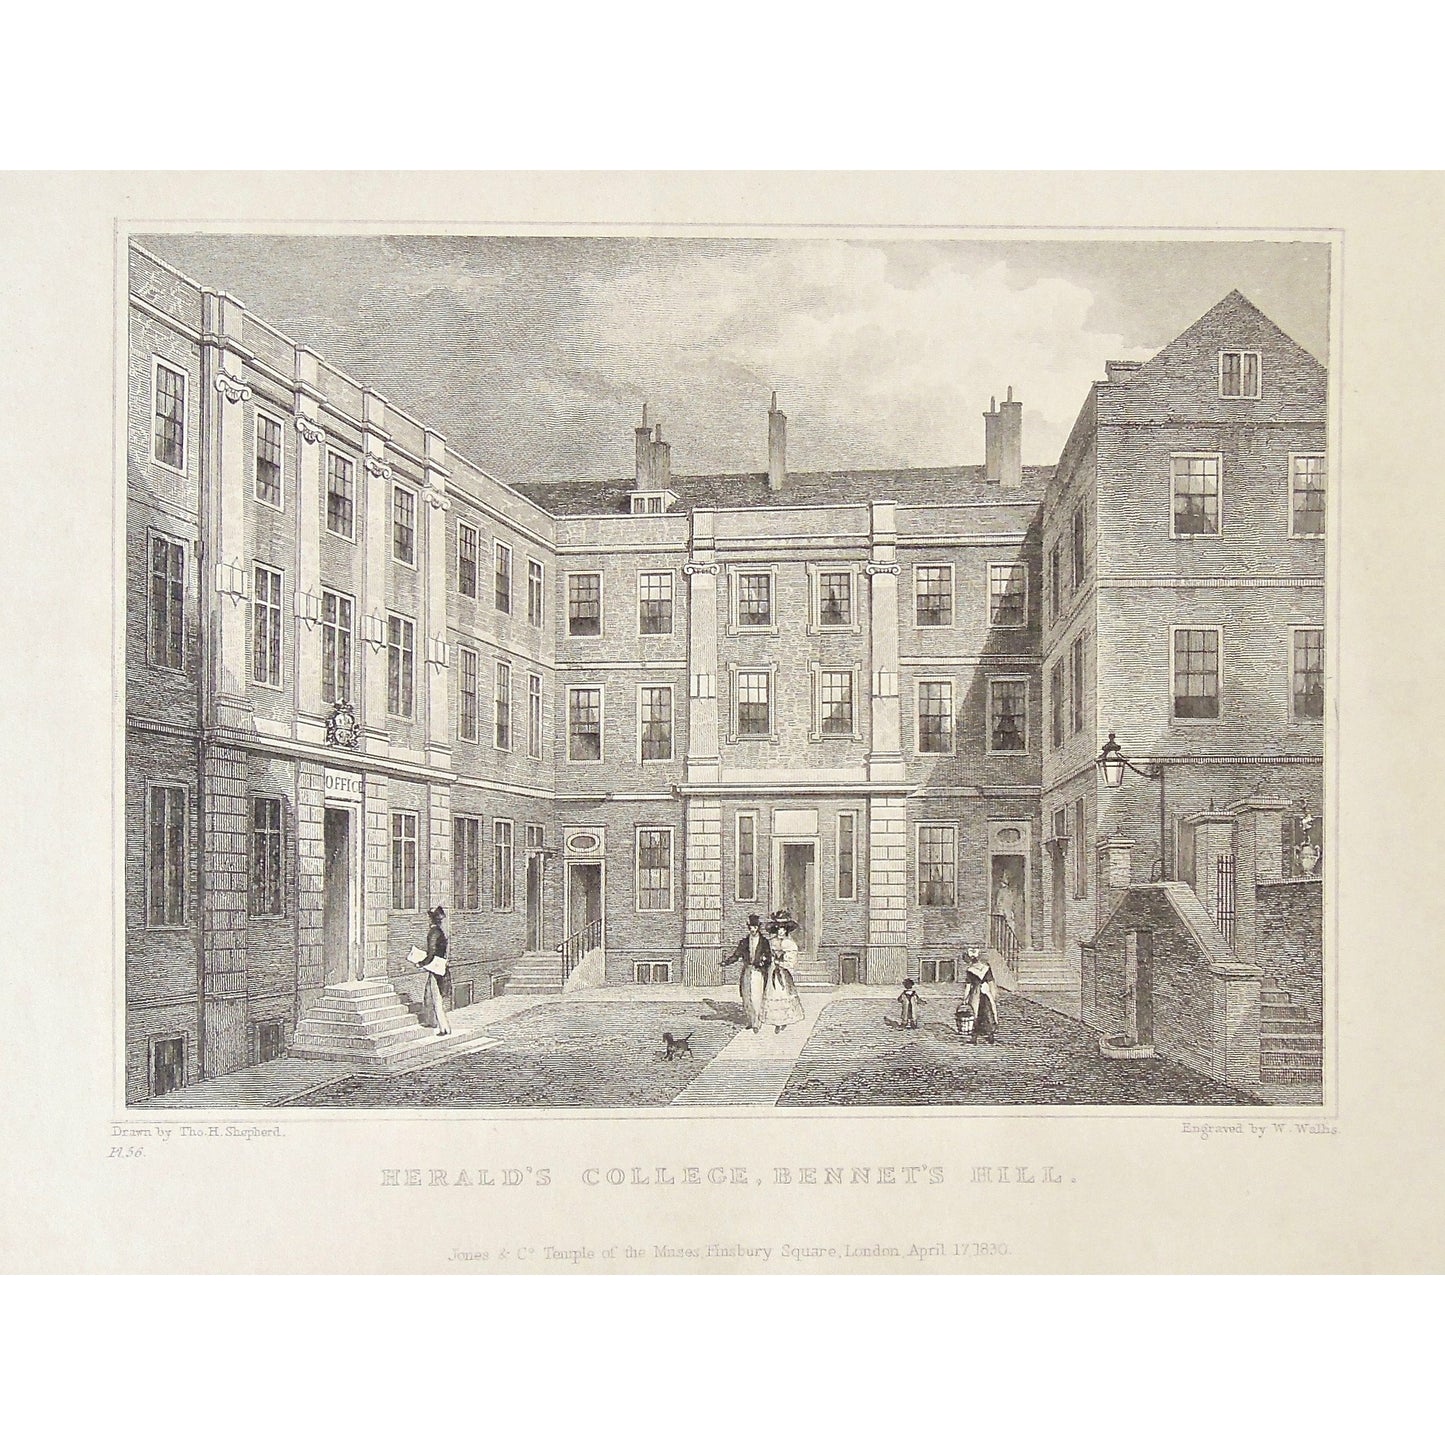 Physician's College, Warwick Lane. / Whittington's College, College Hill. / Herald's College, Bennet's Hill.  (S2-42)